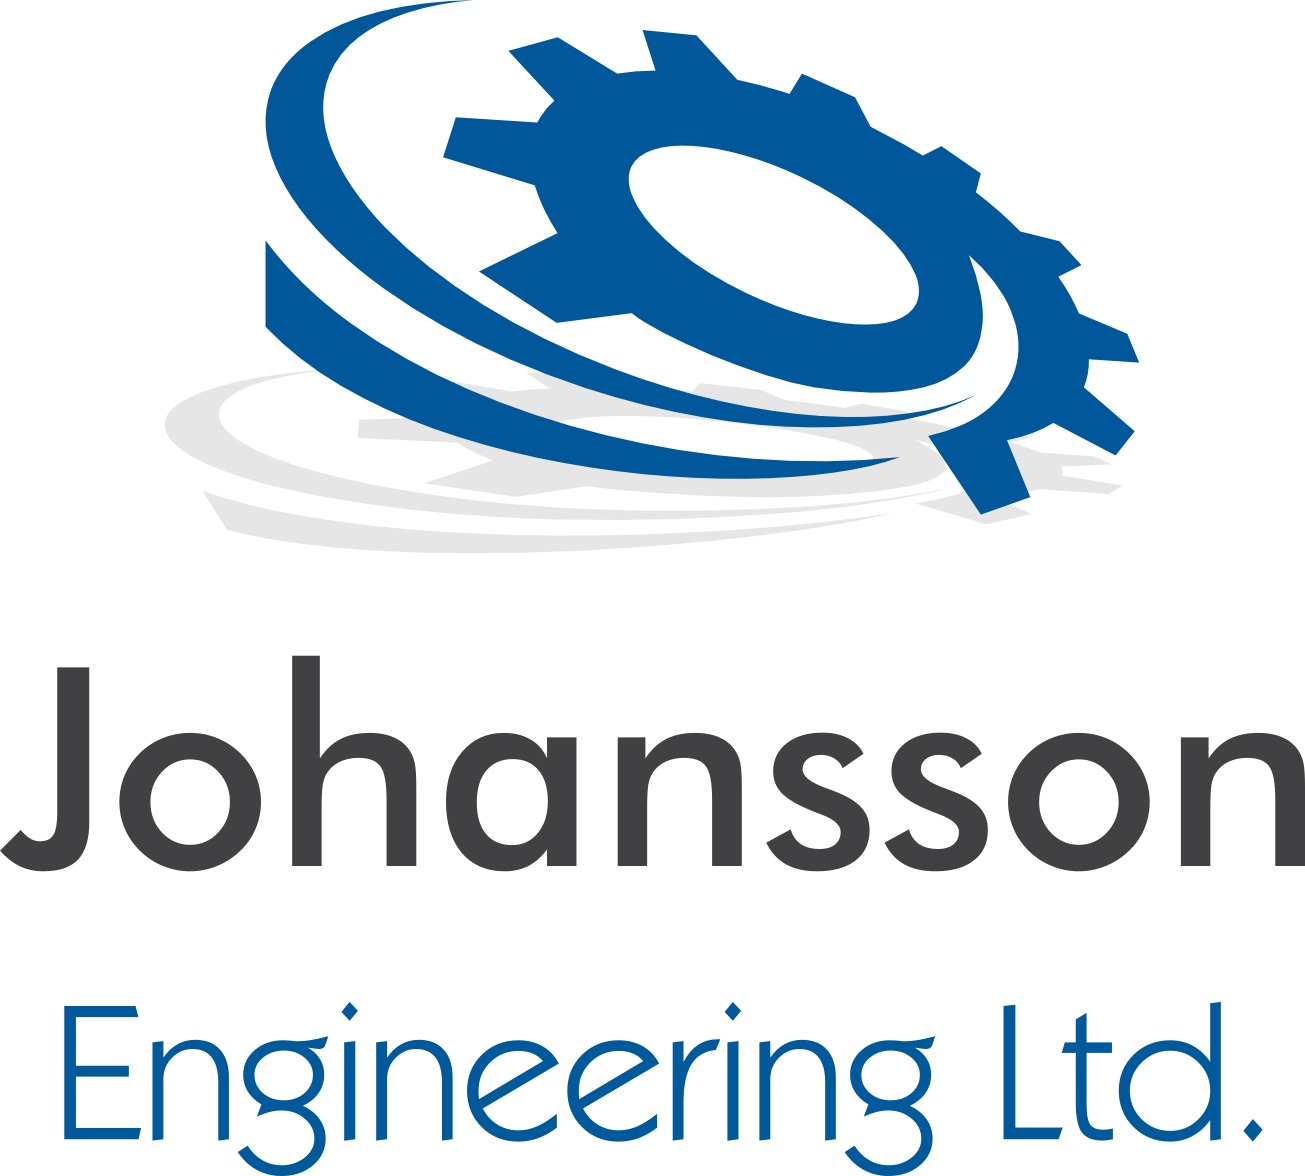 Johansson Engineering Ltd.